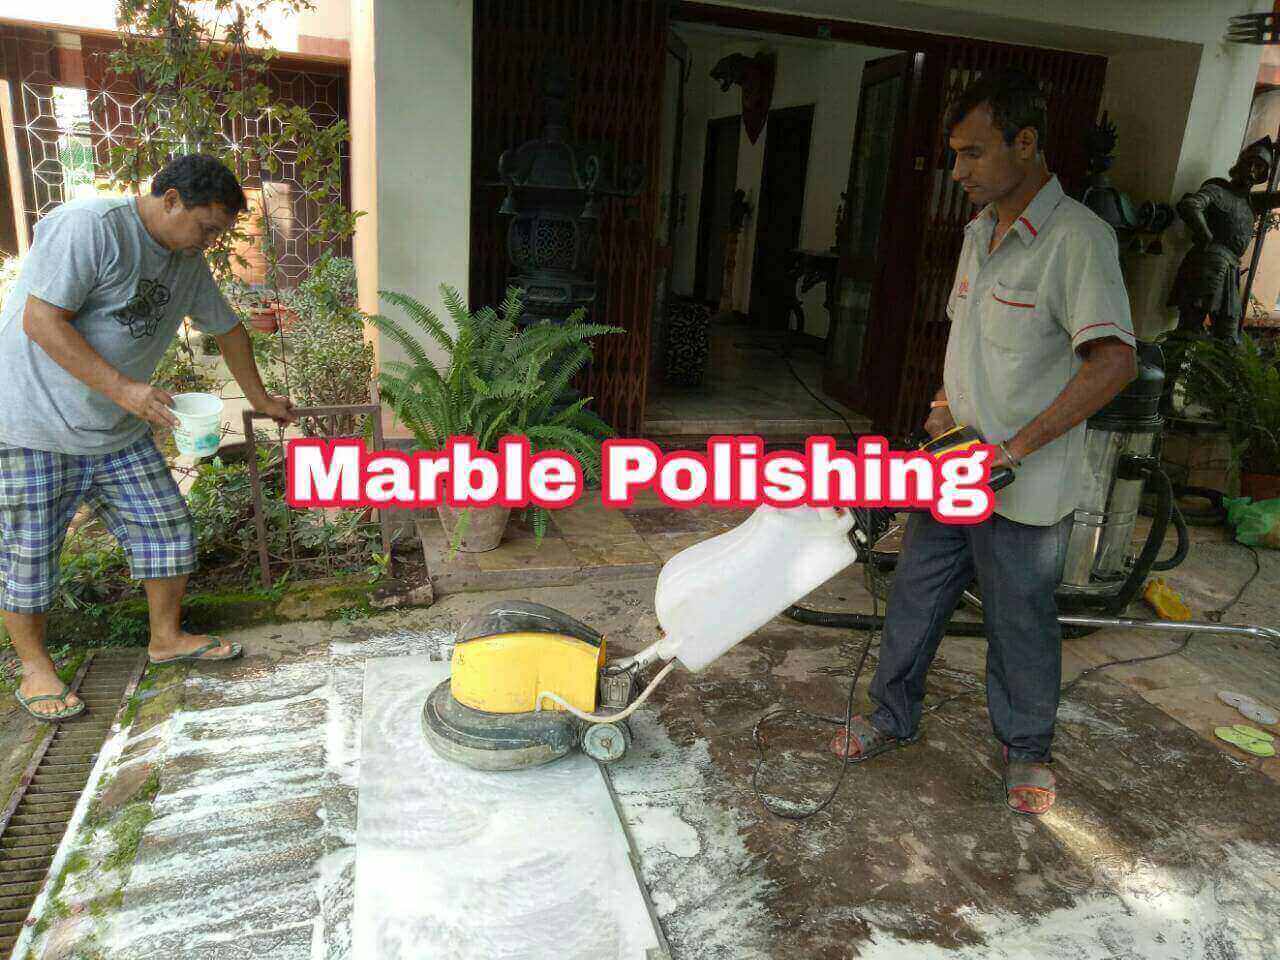 Marble polishing service in kathmandu Nepal